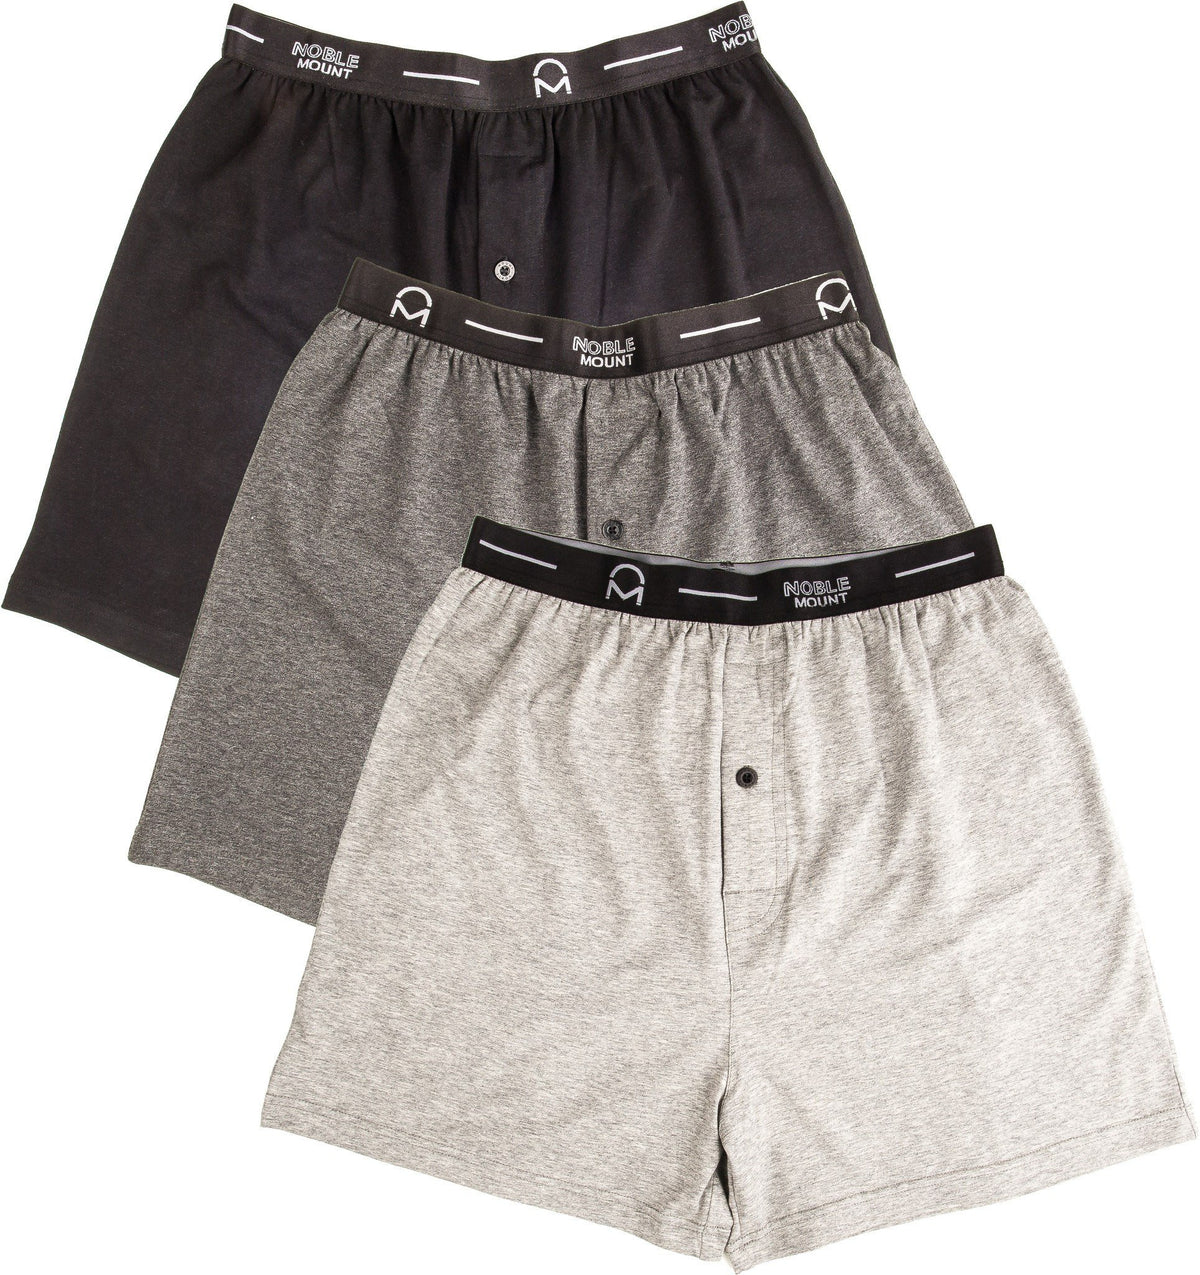 Men's Stretch Cotton Knit Boxers 3-Pack - Set 1 - Black/Grey/Charcoal